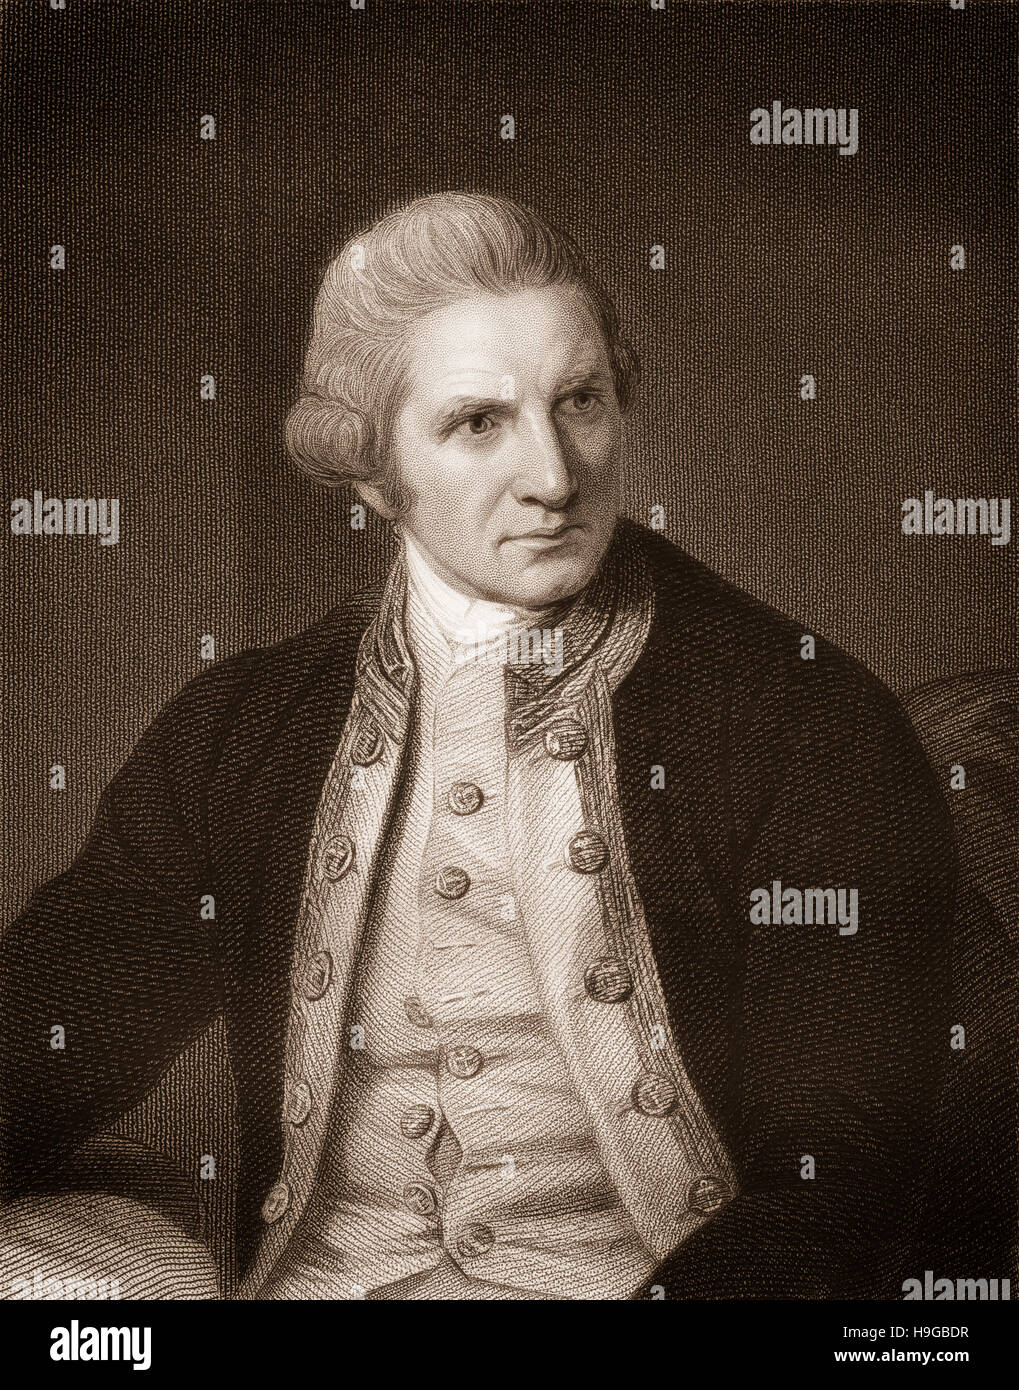 Steel engraving, c. 1860, portrait of Captain James Cook, 1728 - 1779, a British navigator and explorer, Stock Photo